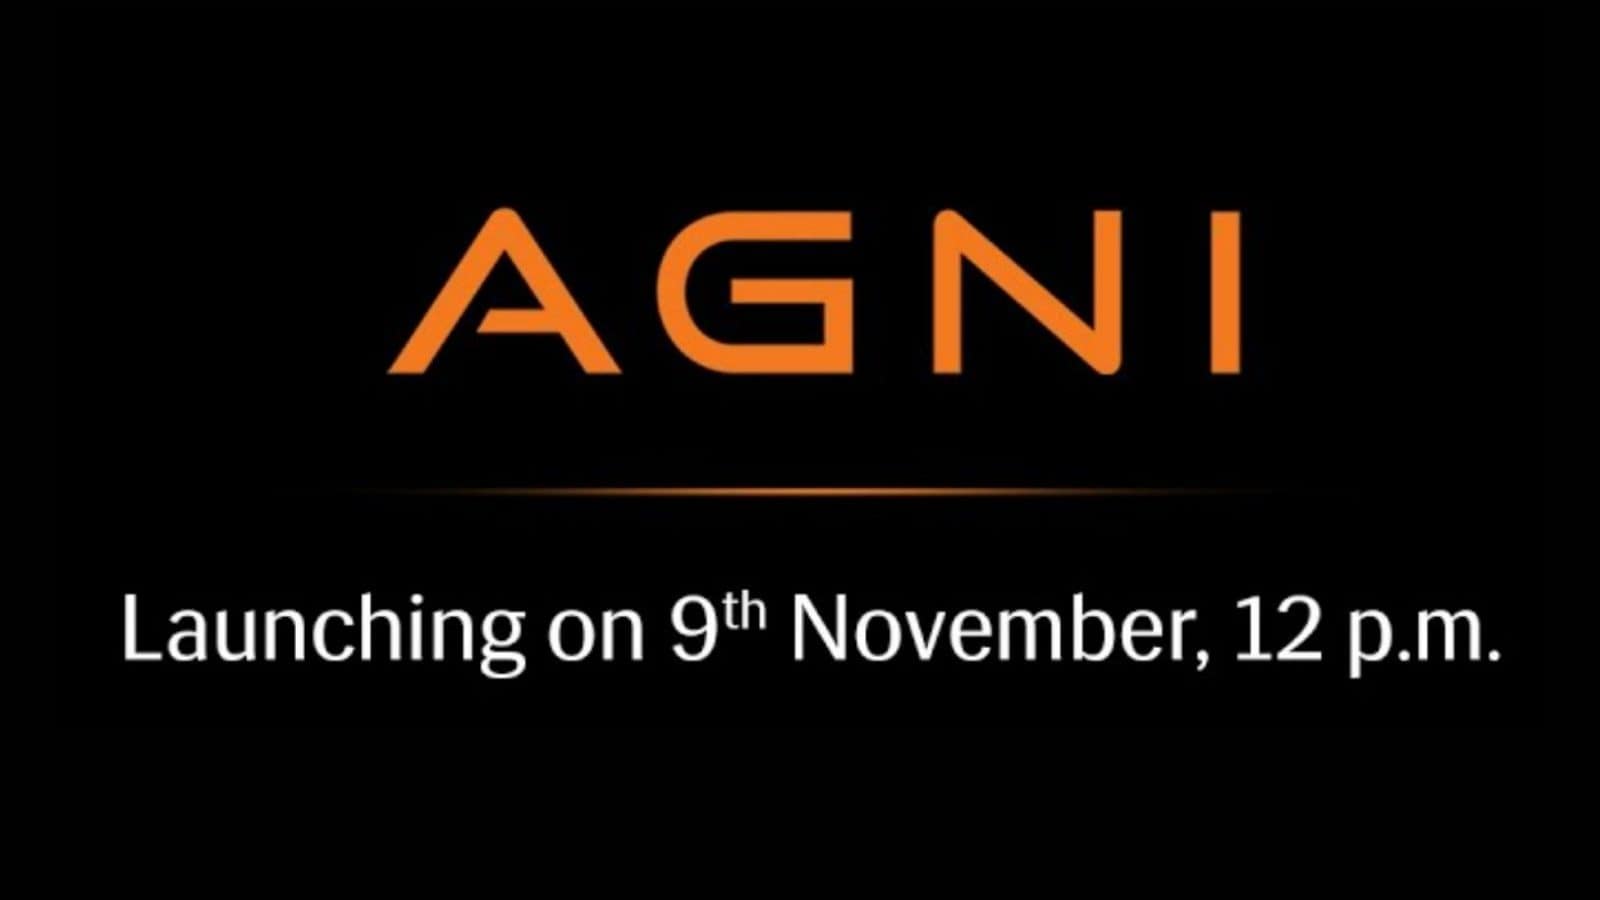 St. Agni | Official Website & Online Store